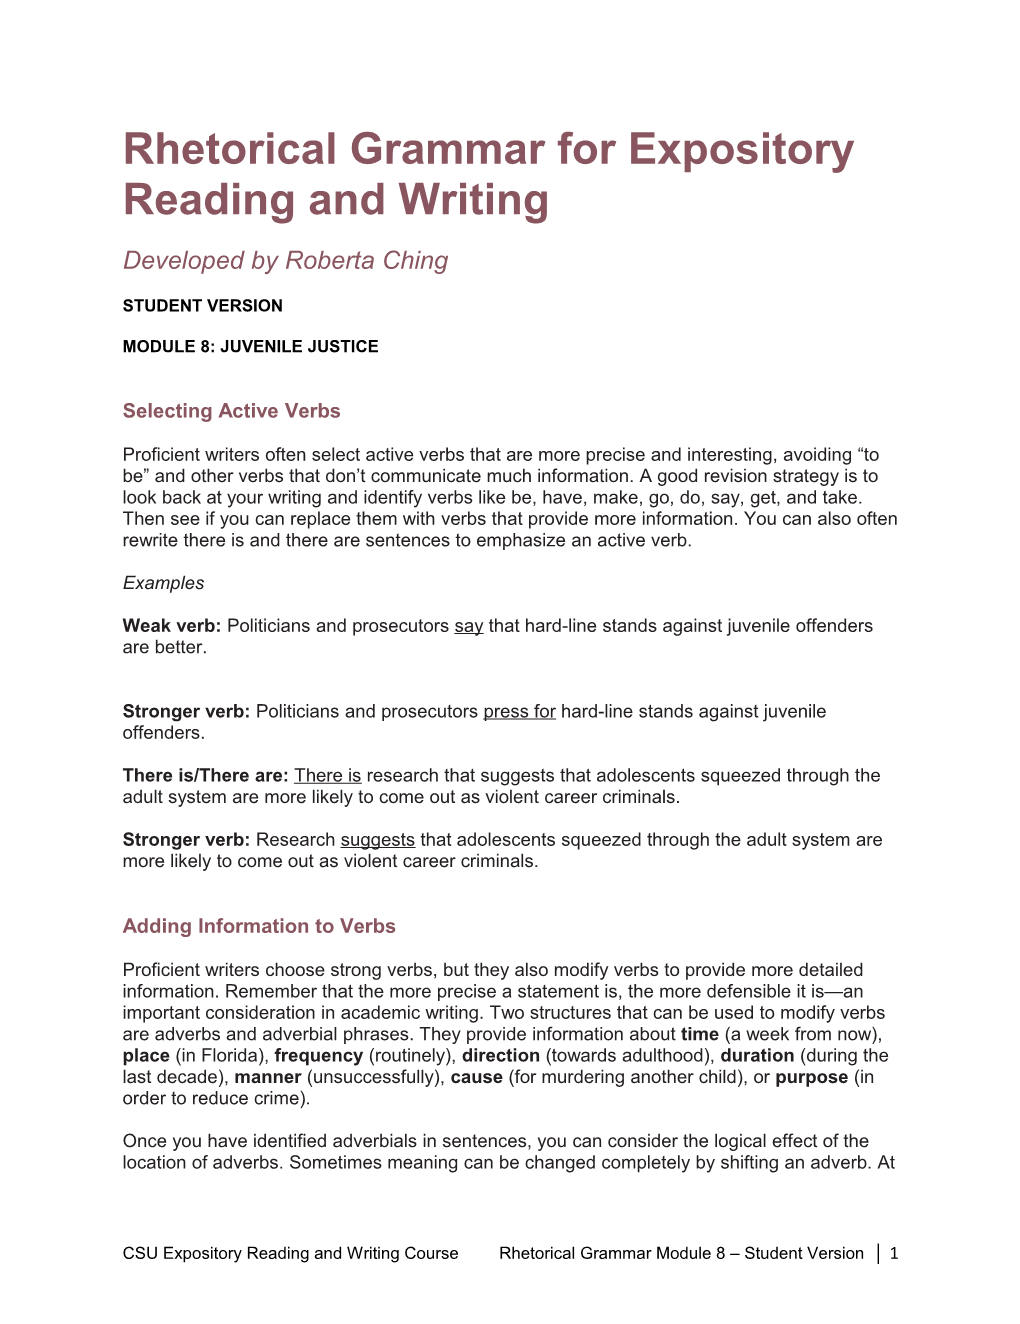 Rhetorical Grammar Forexpository Reading and Writing